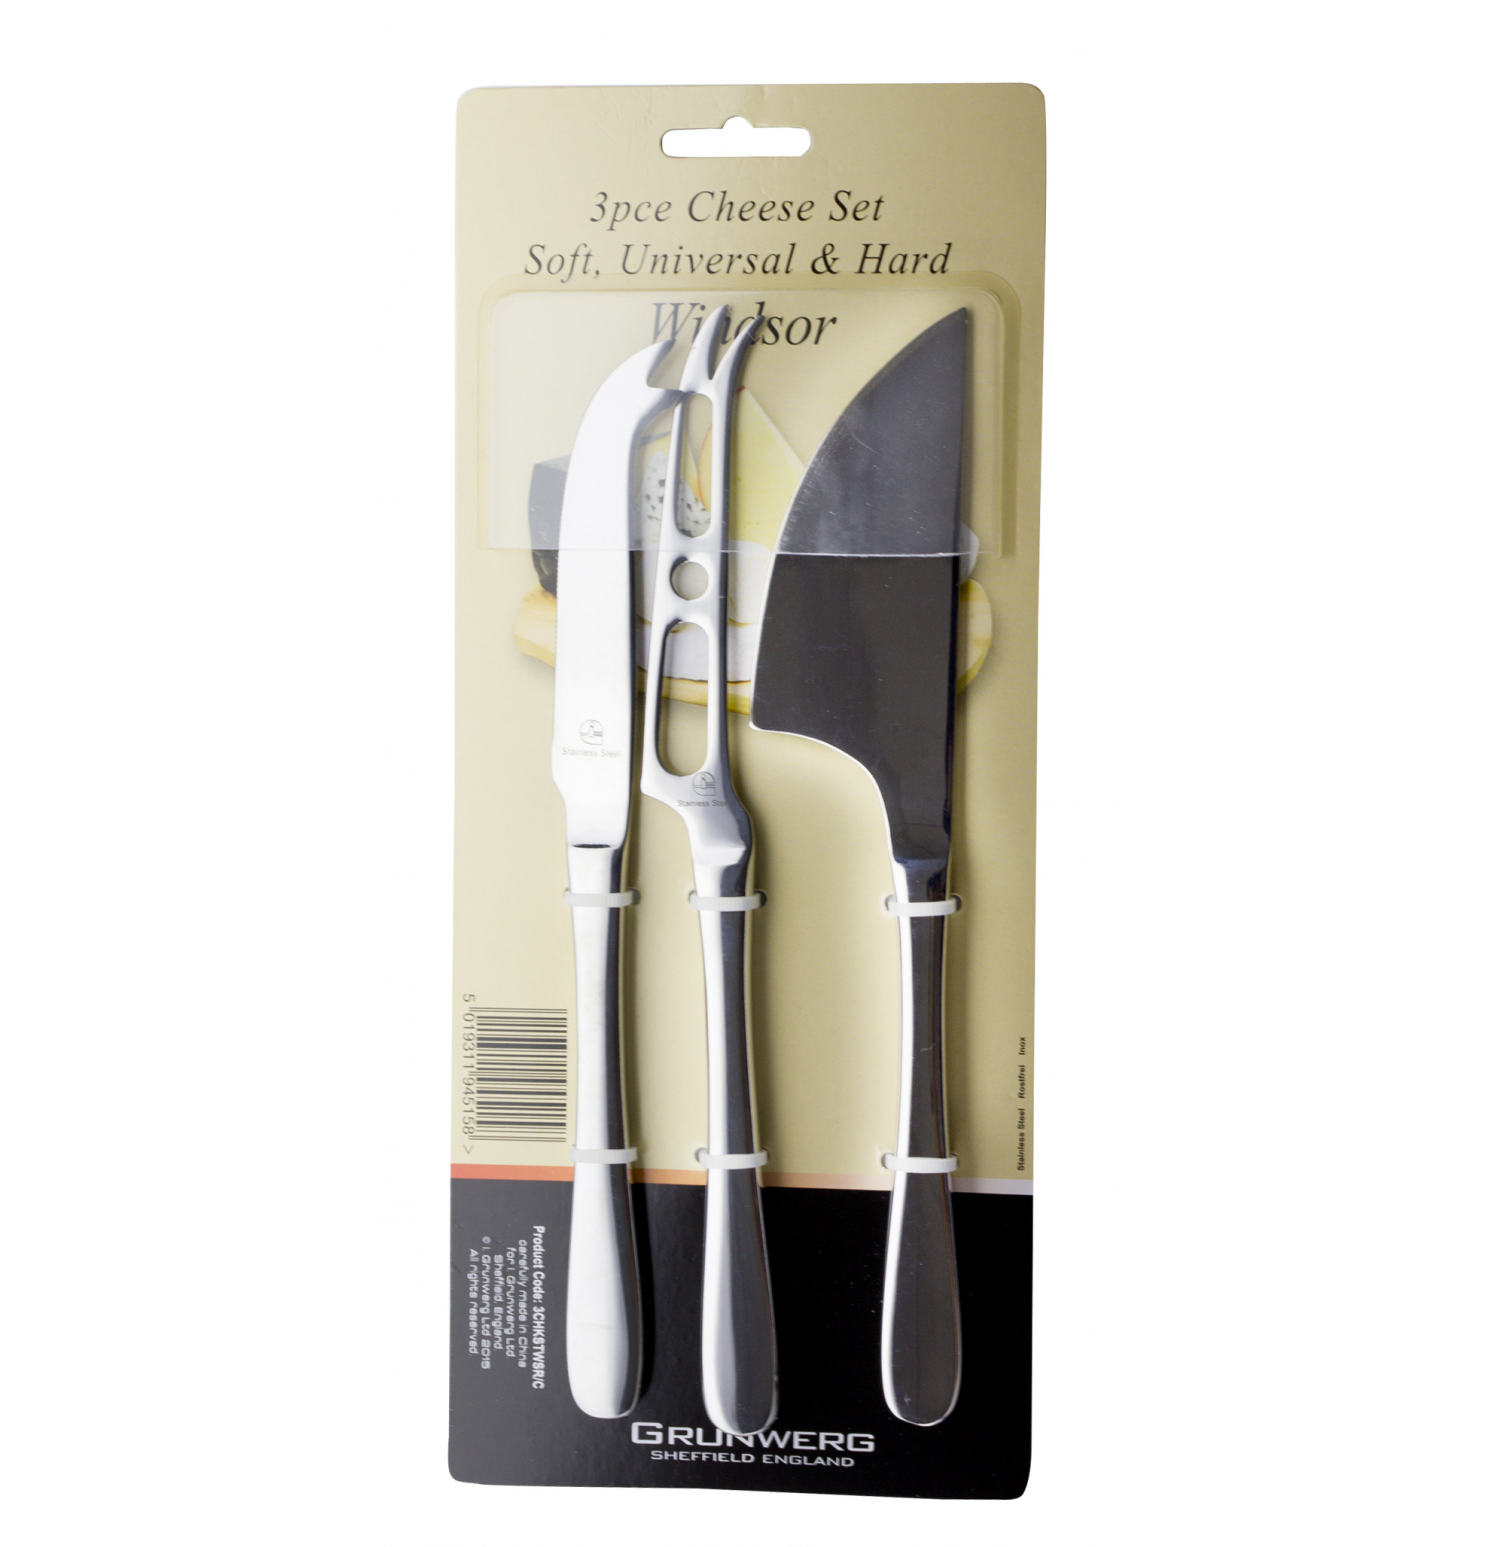 Grunwerg Windsor Stainless Steel Cheese Knives Set 3 piece Soft Universal Hard 